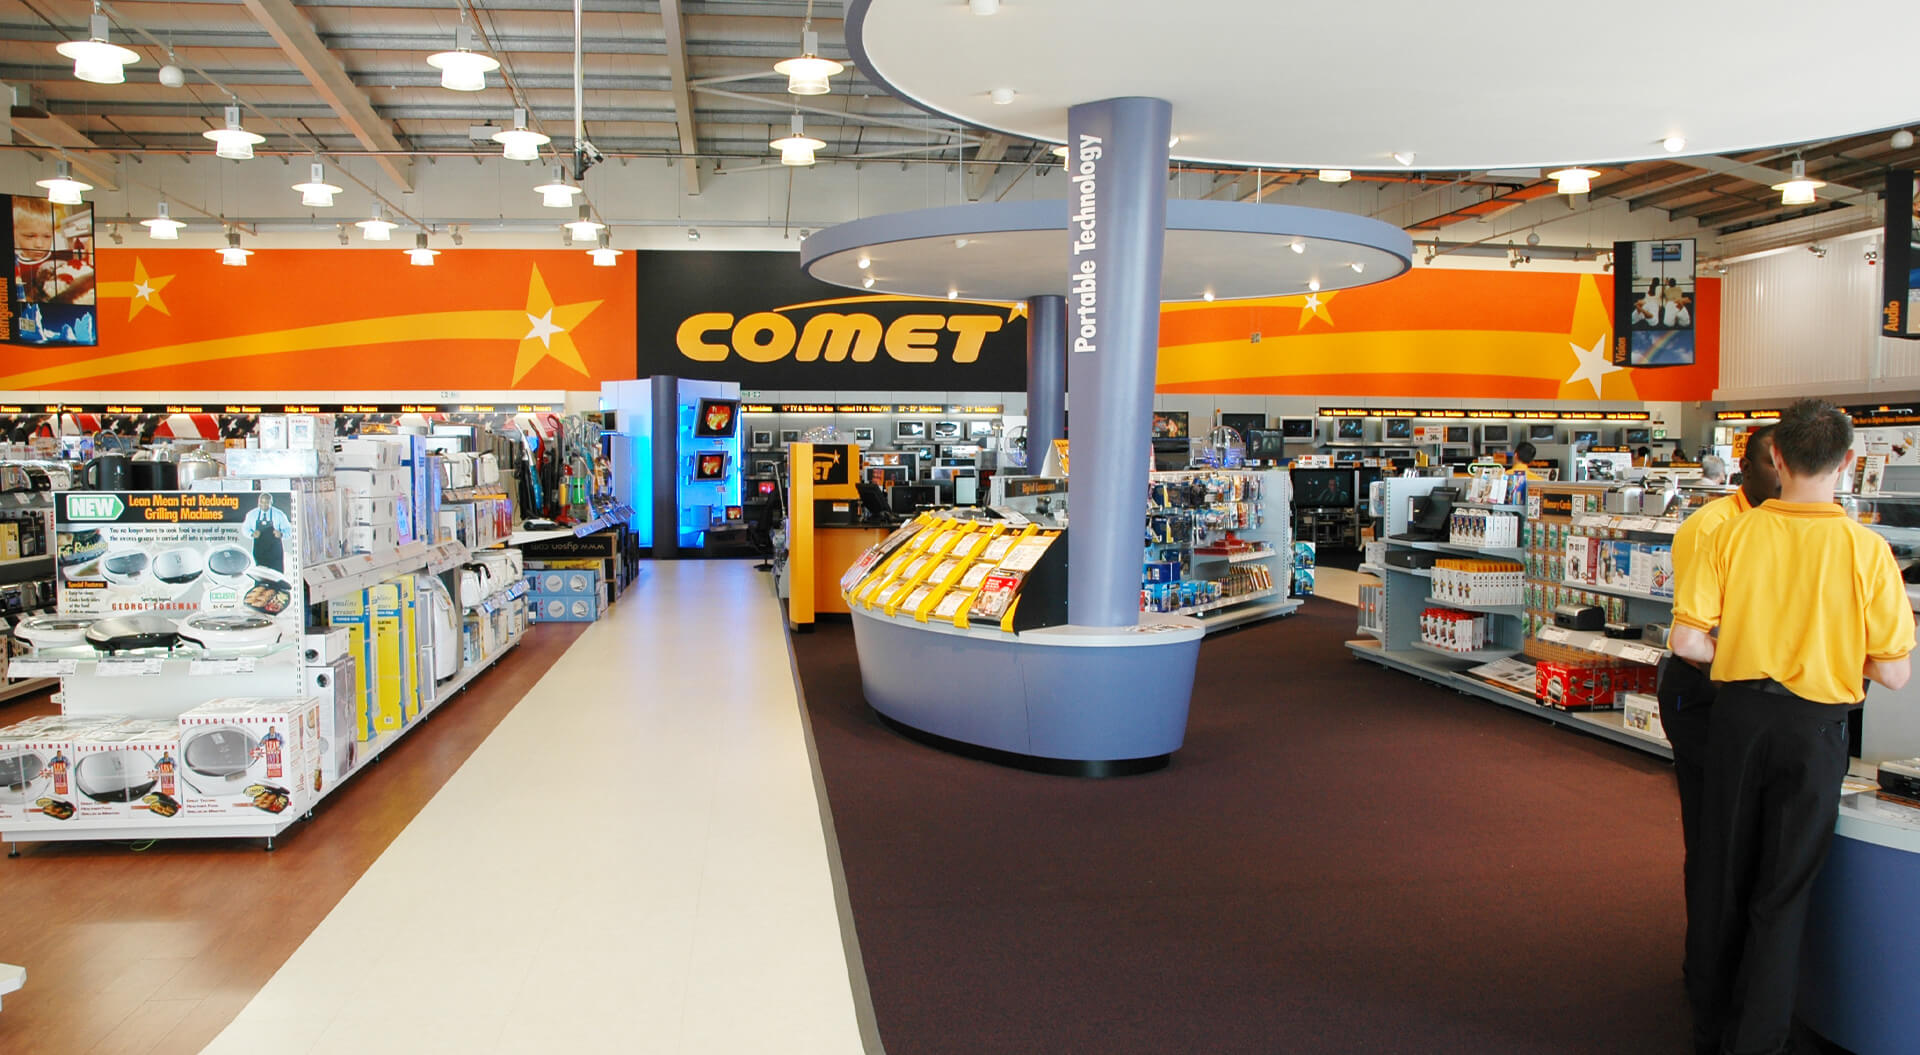 Comet Technology Store rebrand identity, interior design digital camera merchandising display and super graphic wall communication